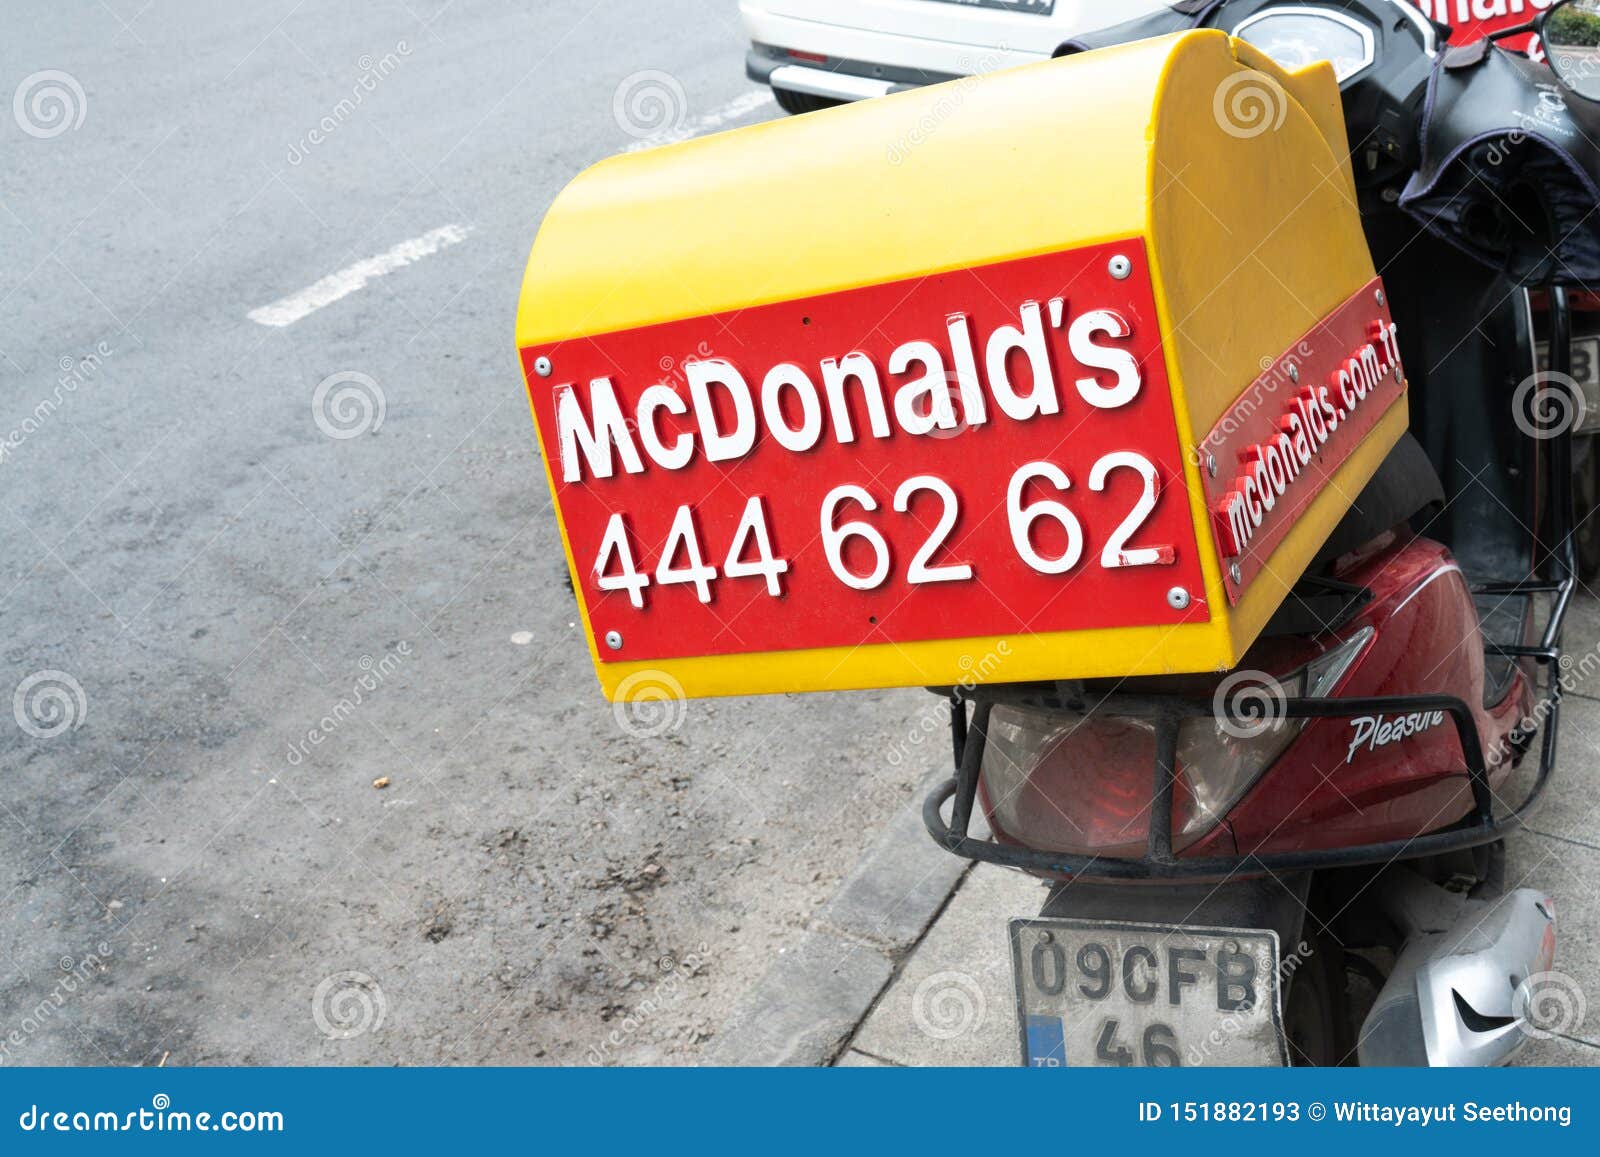 Mcdonalds delivery